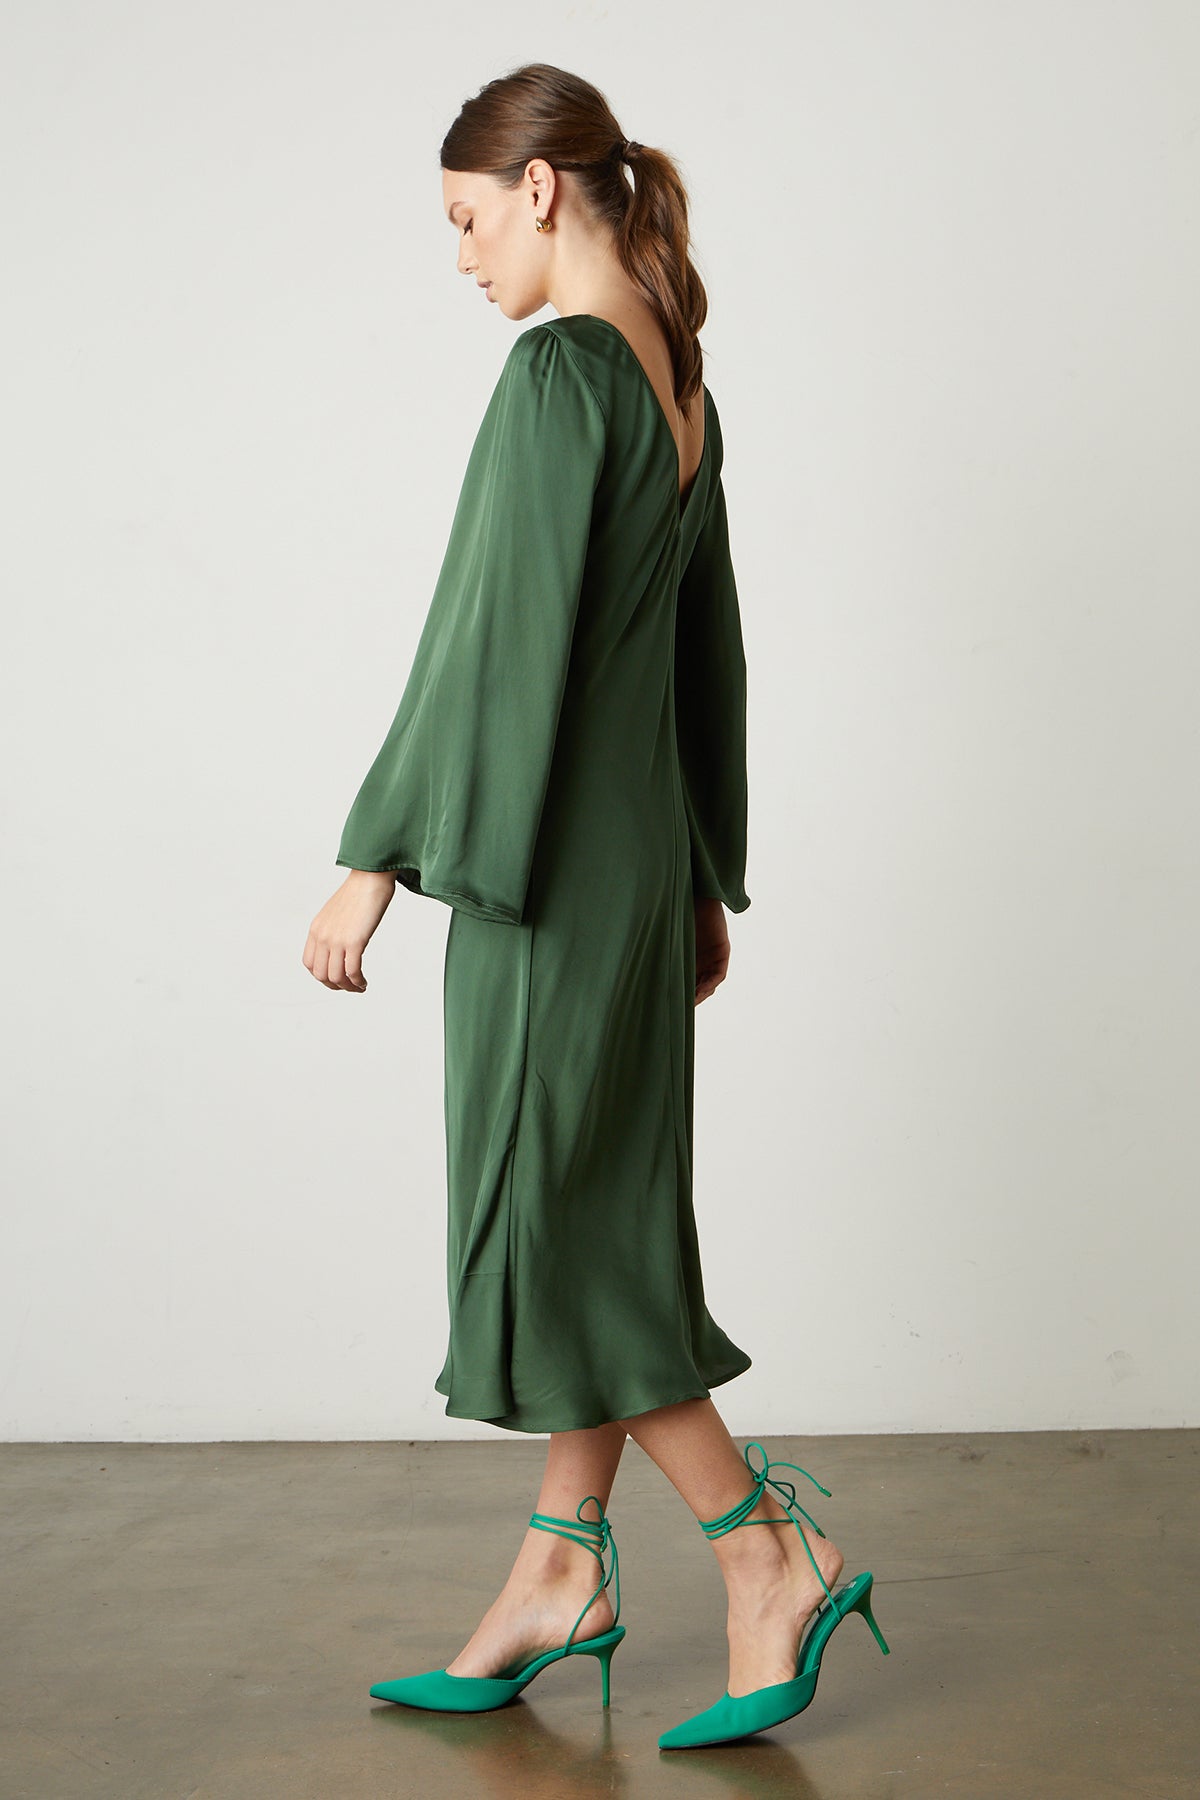   Catherine Satin Midi Dress in fern green full length side 